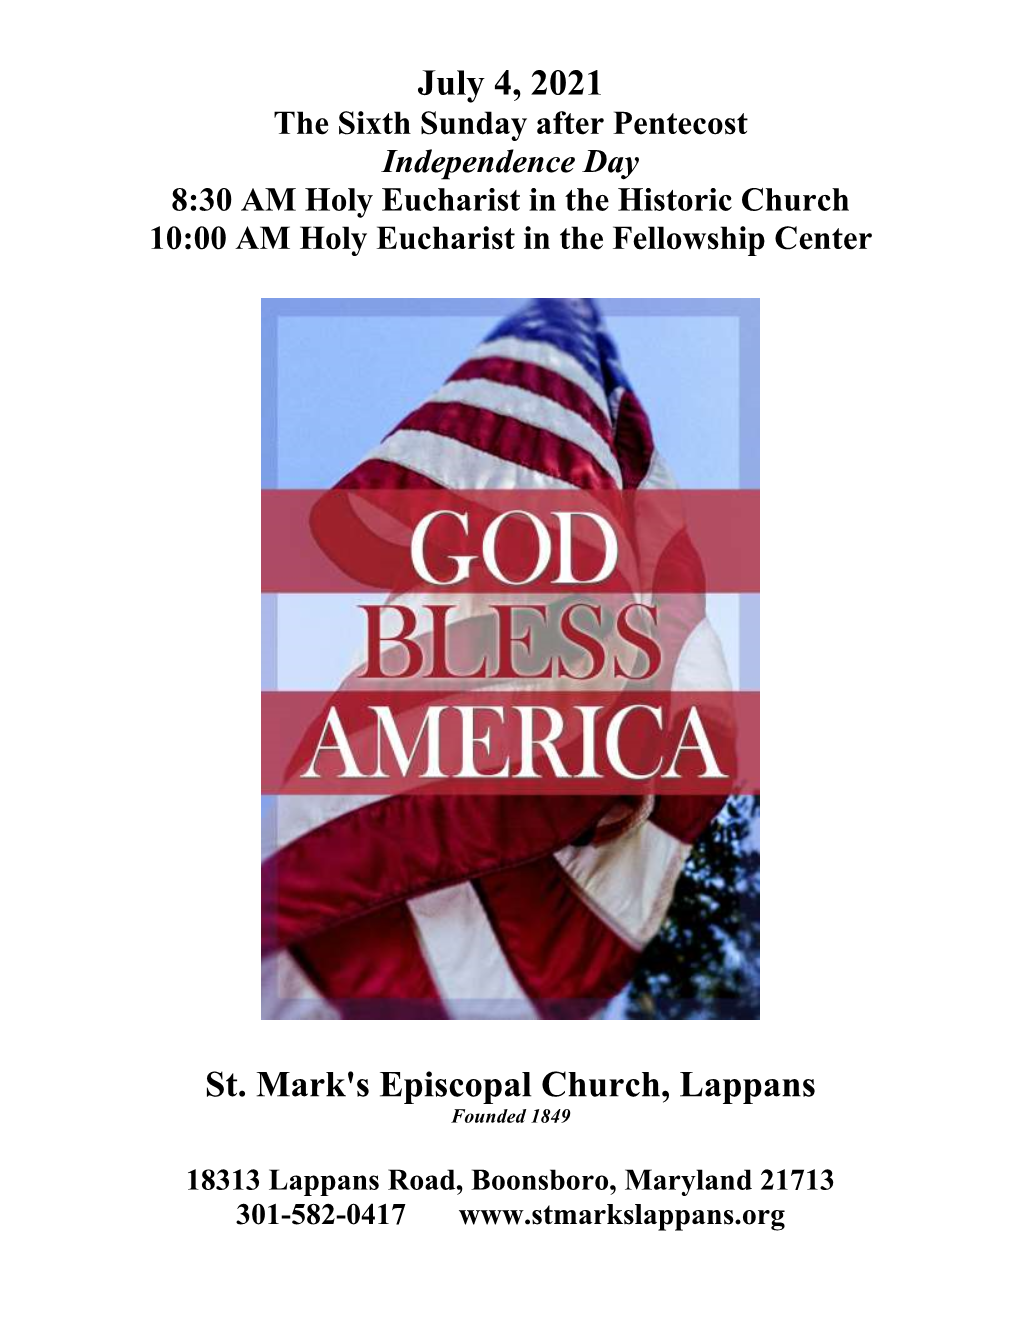 July 4, 2021 St. Mark's Episcopal Church, Lappans